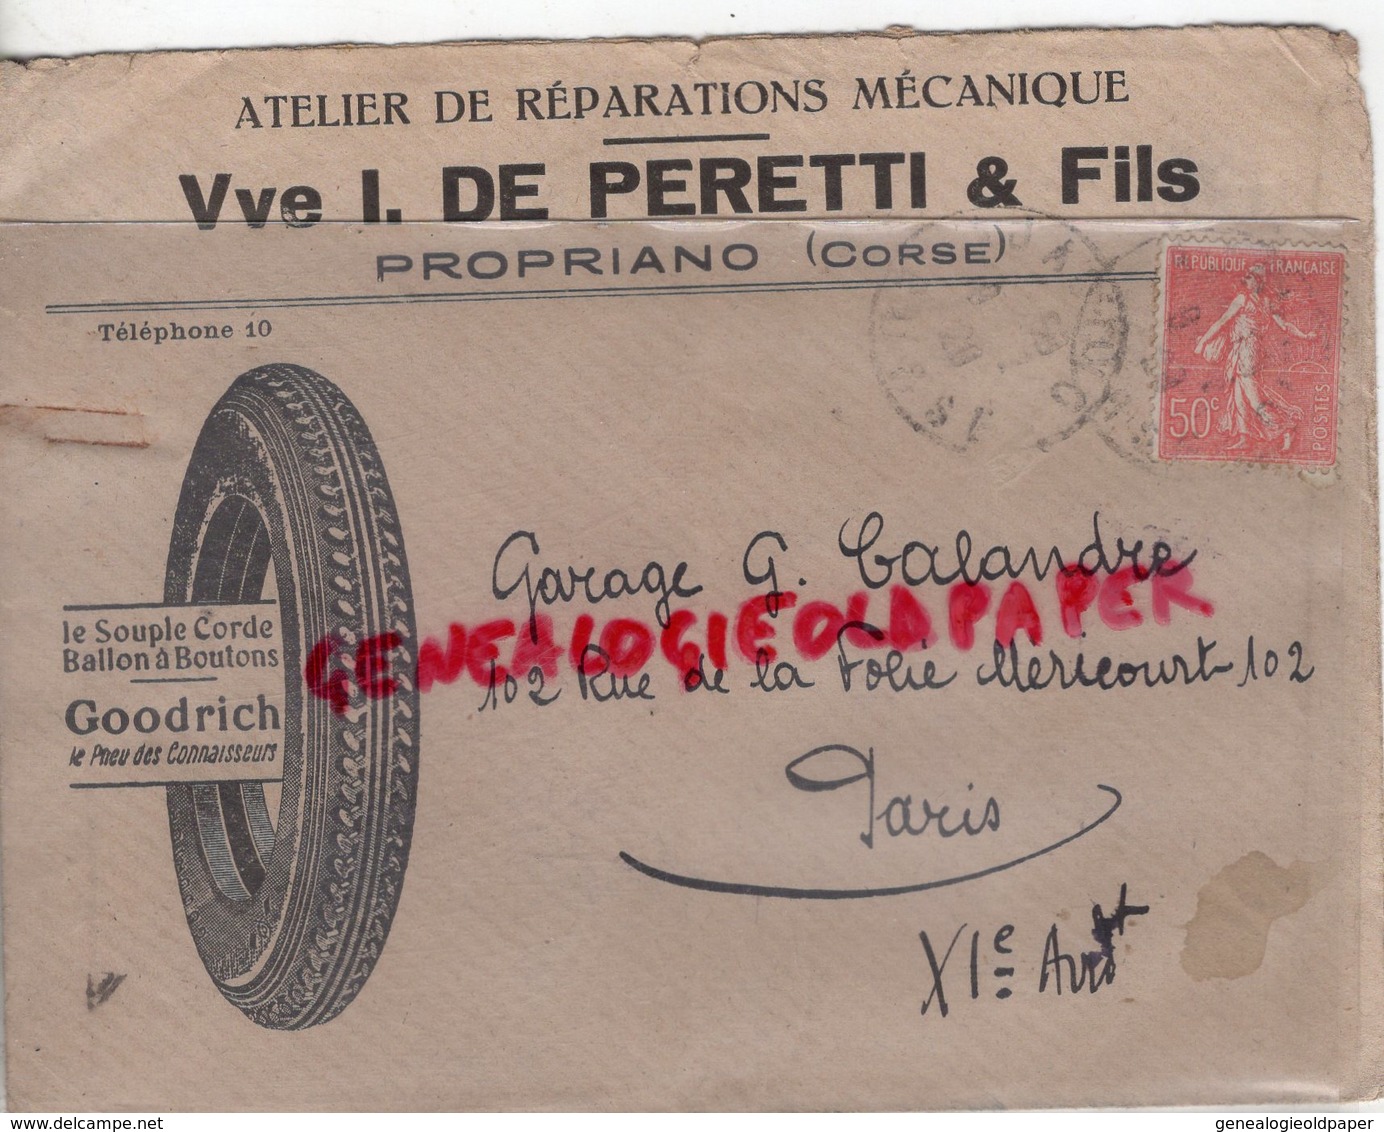 20- PROPRIANO- RARE ENVELOPPE VEUVE I. DE PERETTI & FILS- GARAGE ATELIER REPARATIONS MECANIQUE-PNEU GOODRICH-1920 - Cars